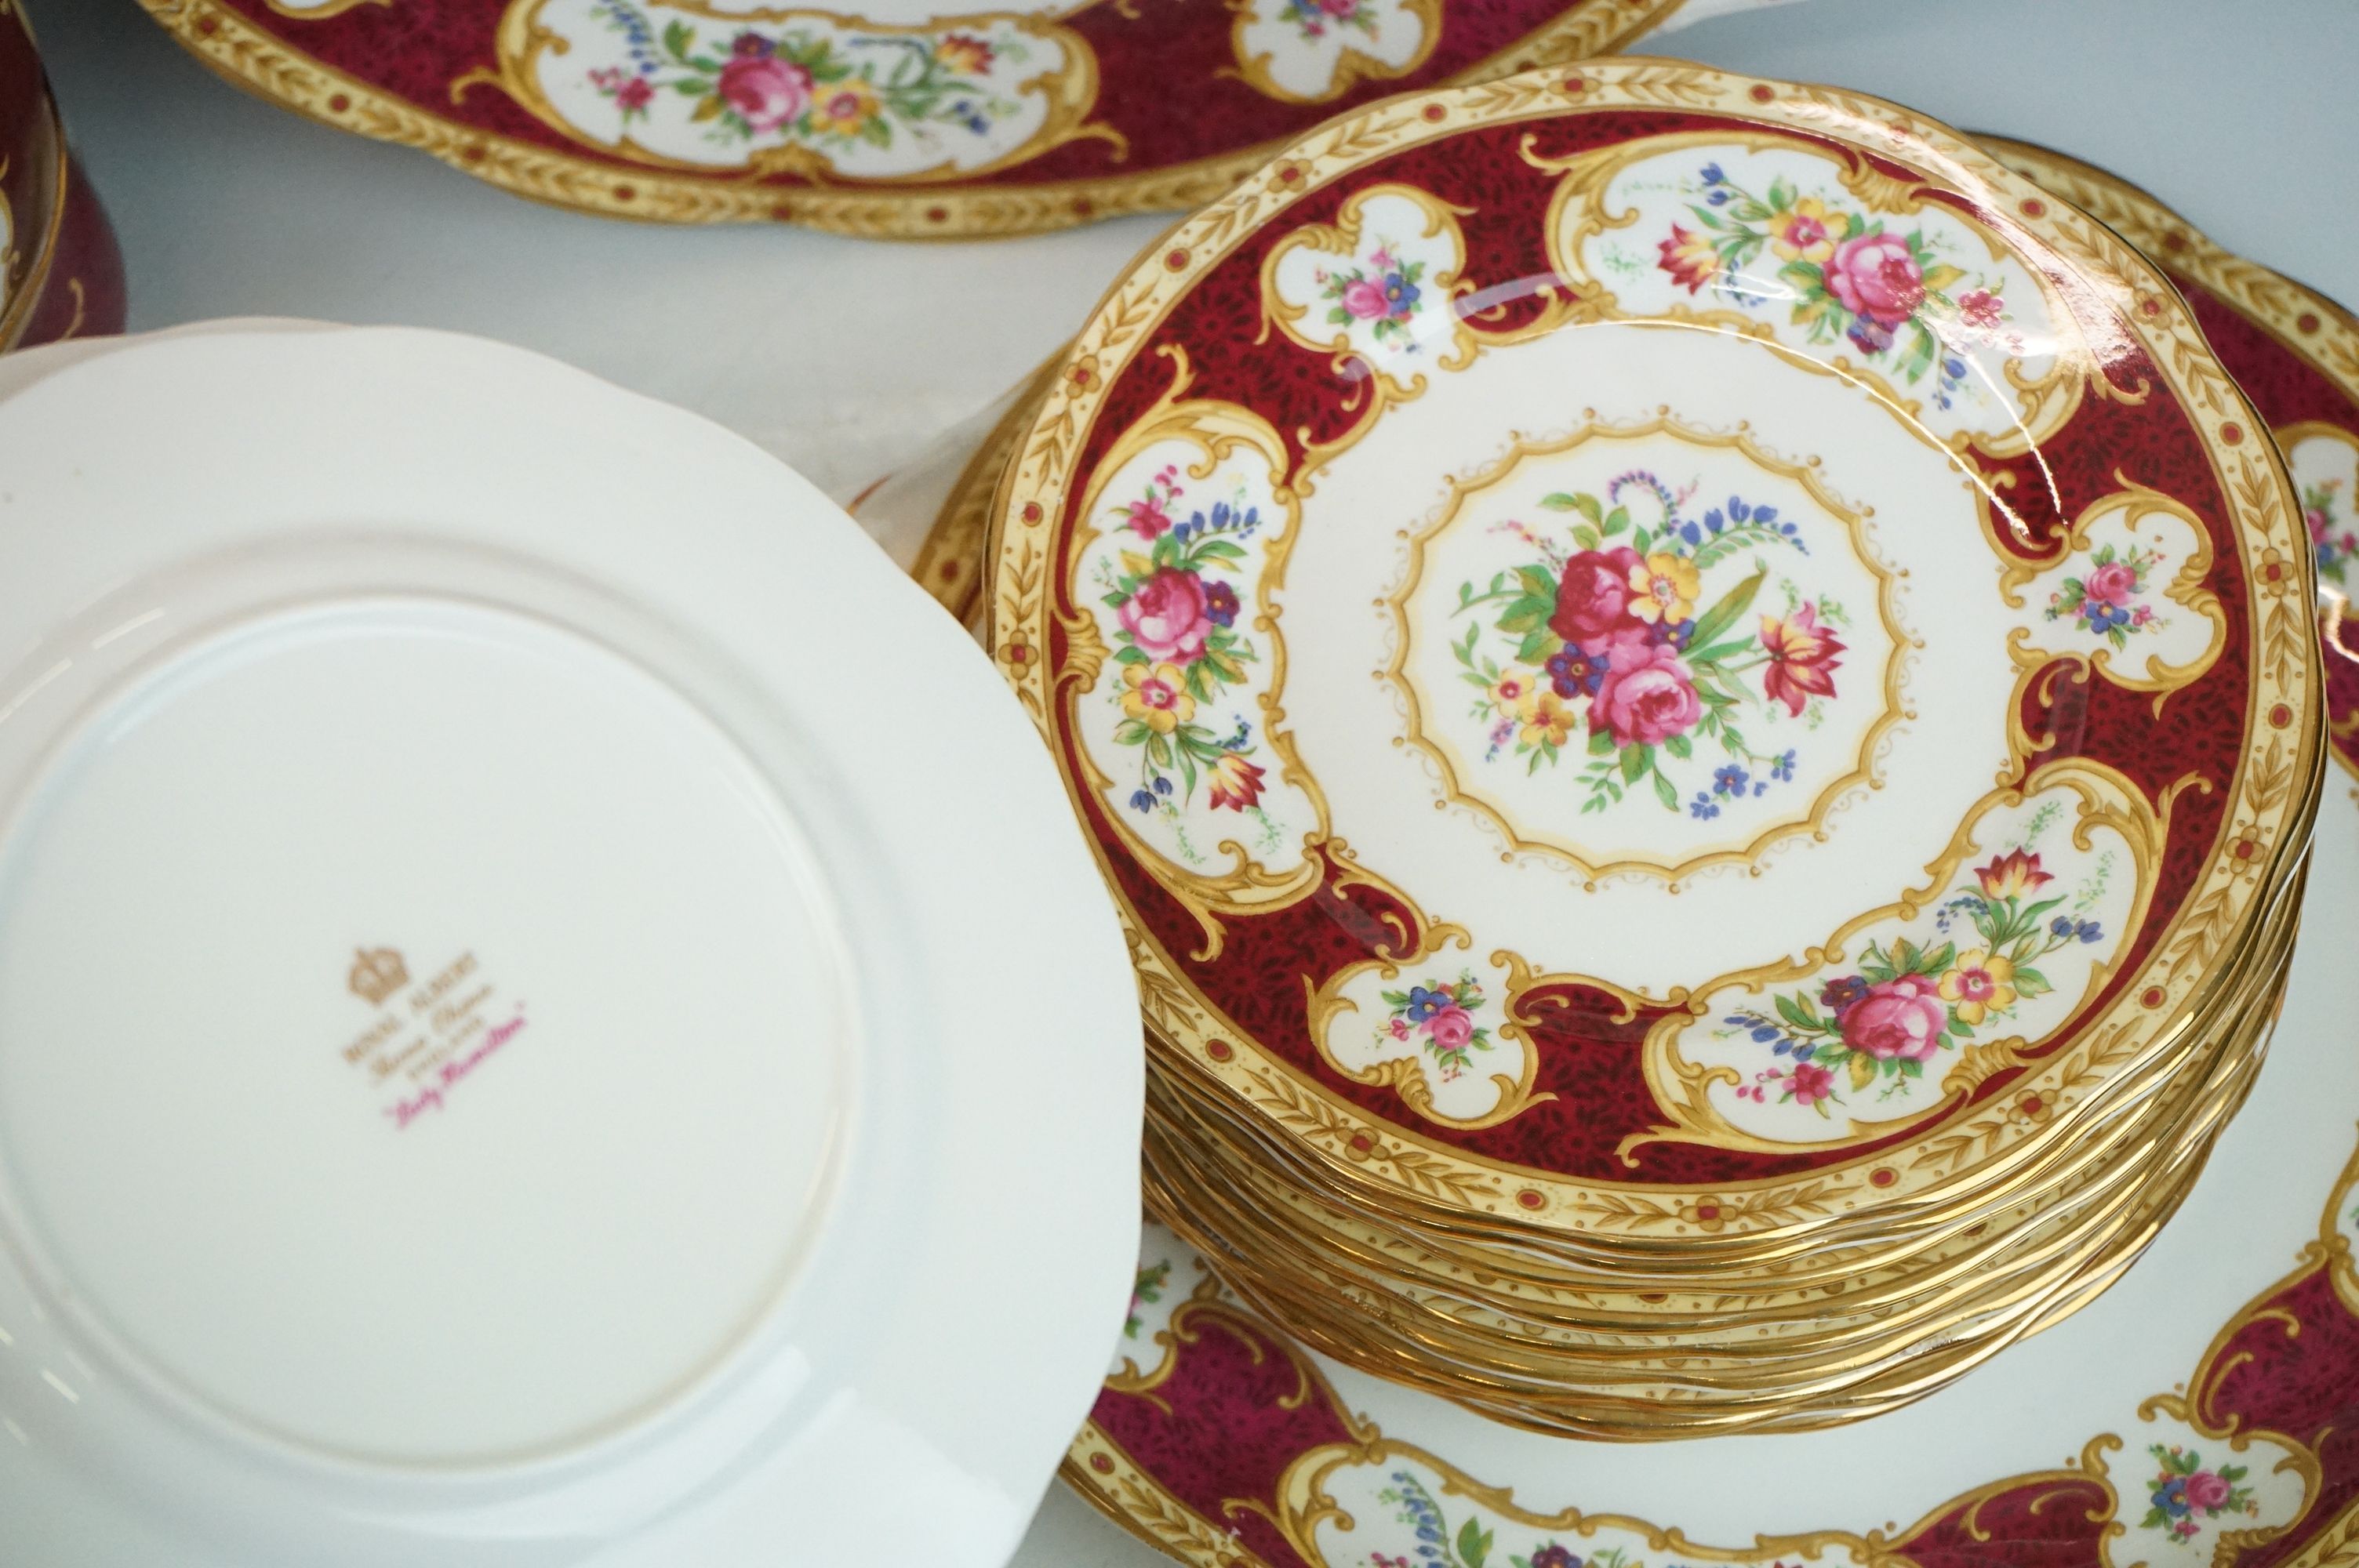 Royal Albert Lady Hamilton tea service consisting of 12 tea cups, 11 saucers, two creamer jugs, salt - Image 8 of 11